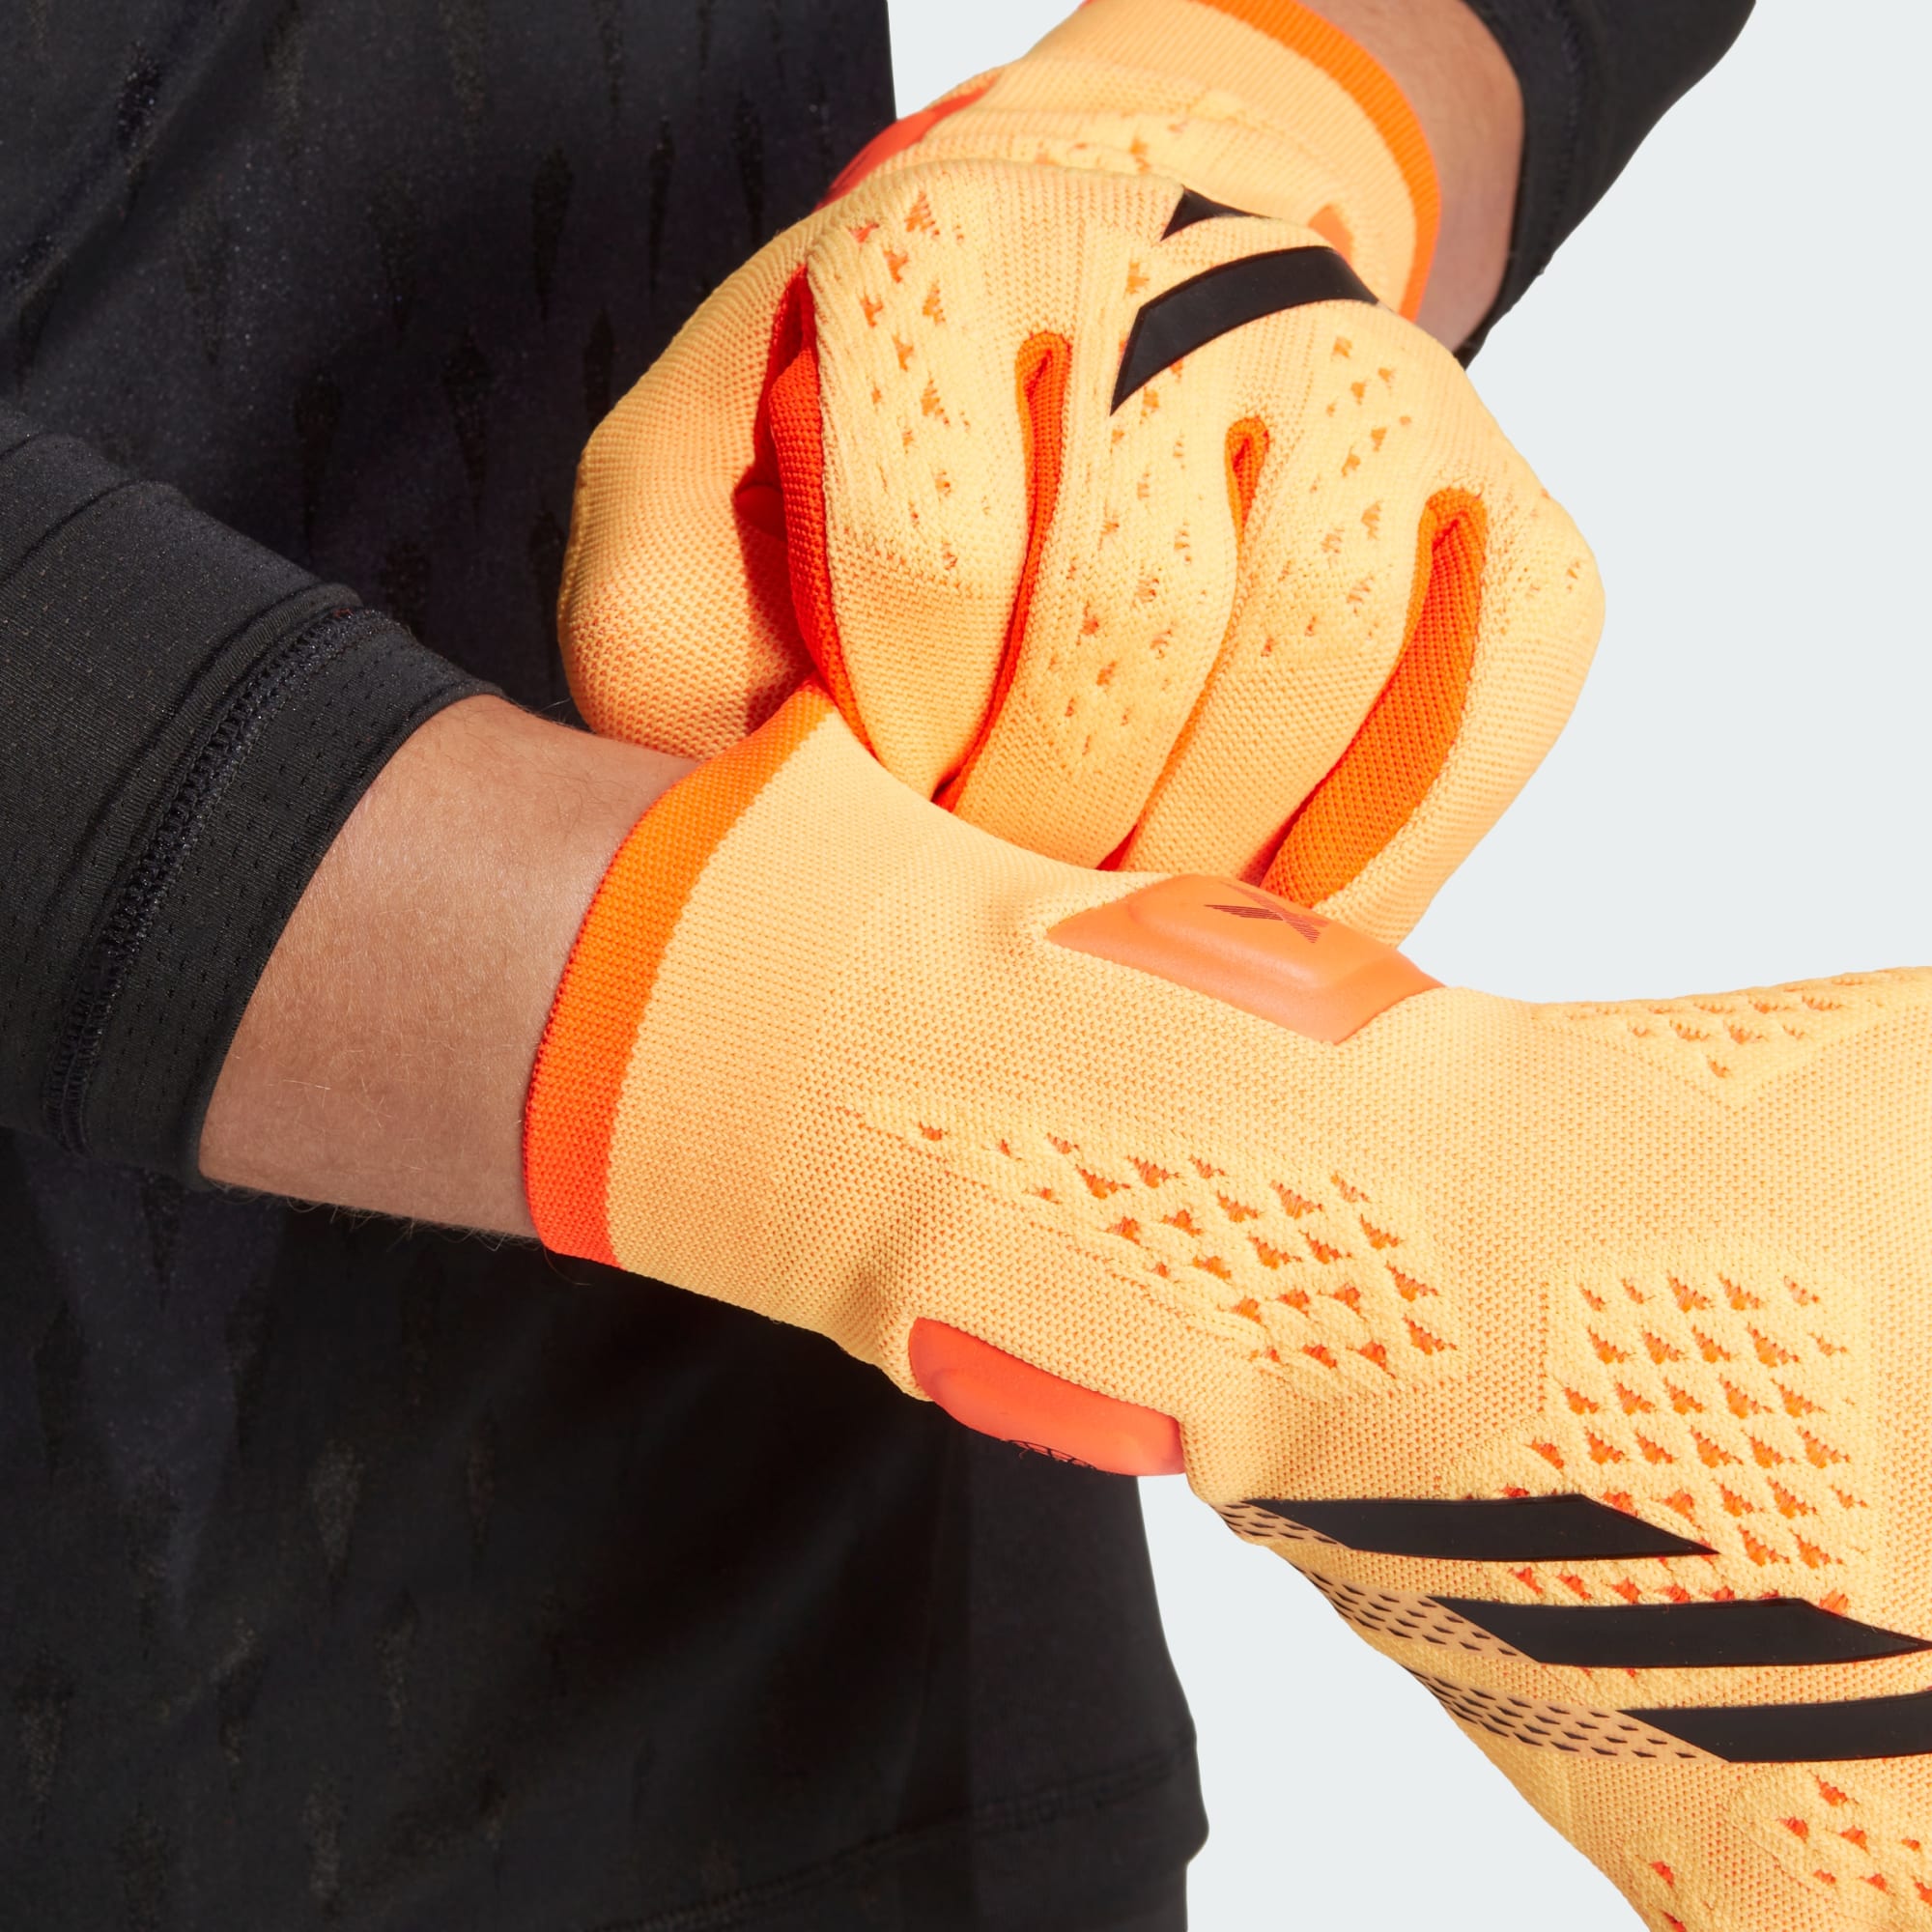 Adidas Predator Pro Goalkeeper Gloves Orange - Size 10